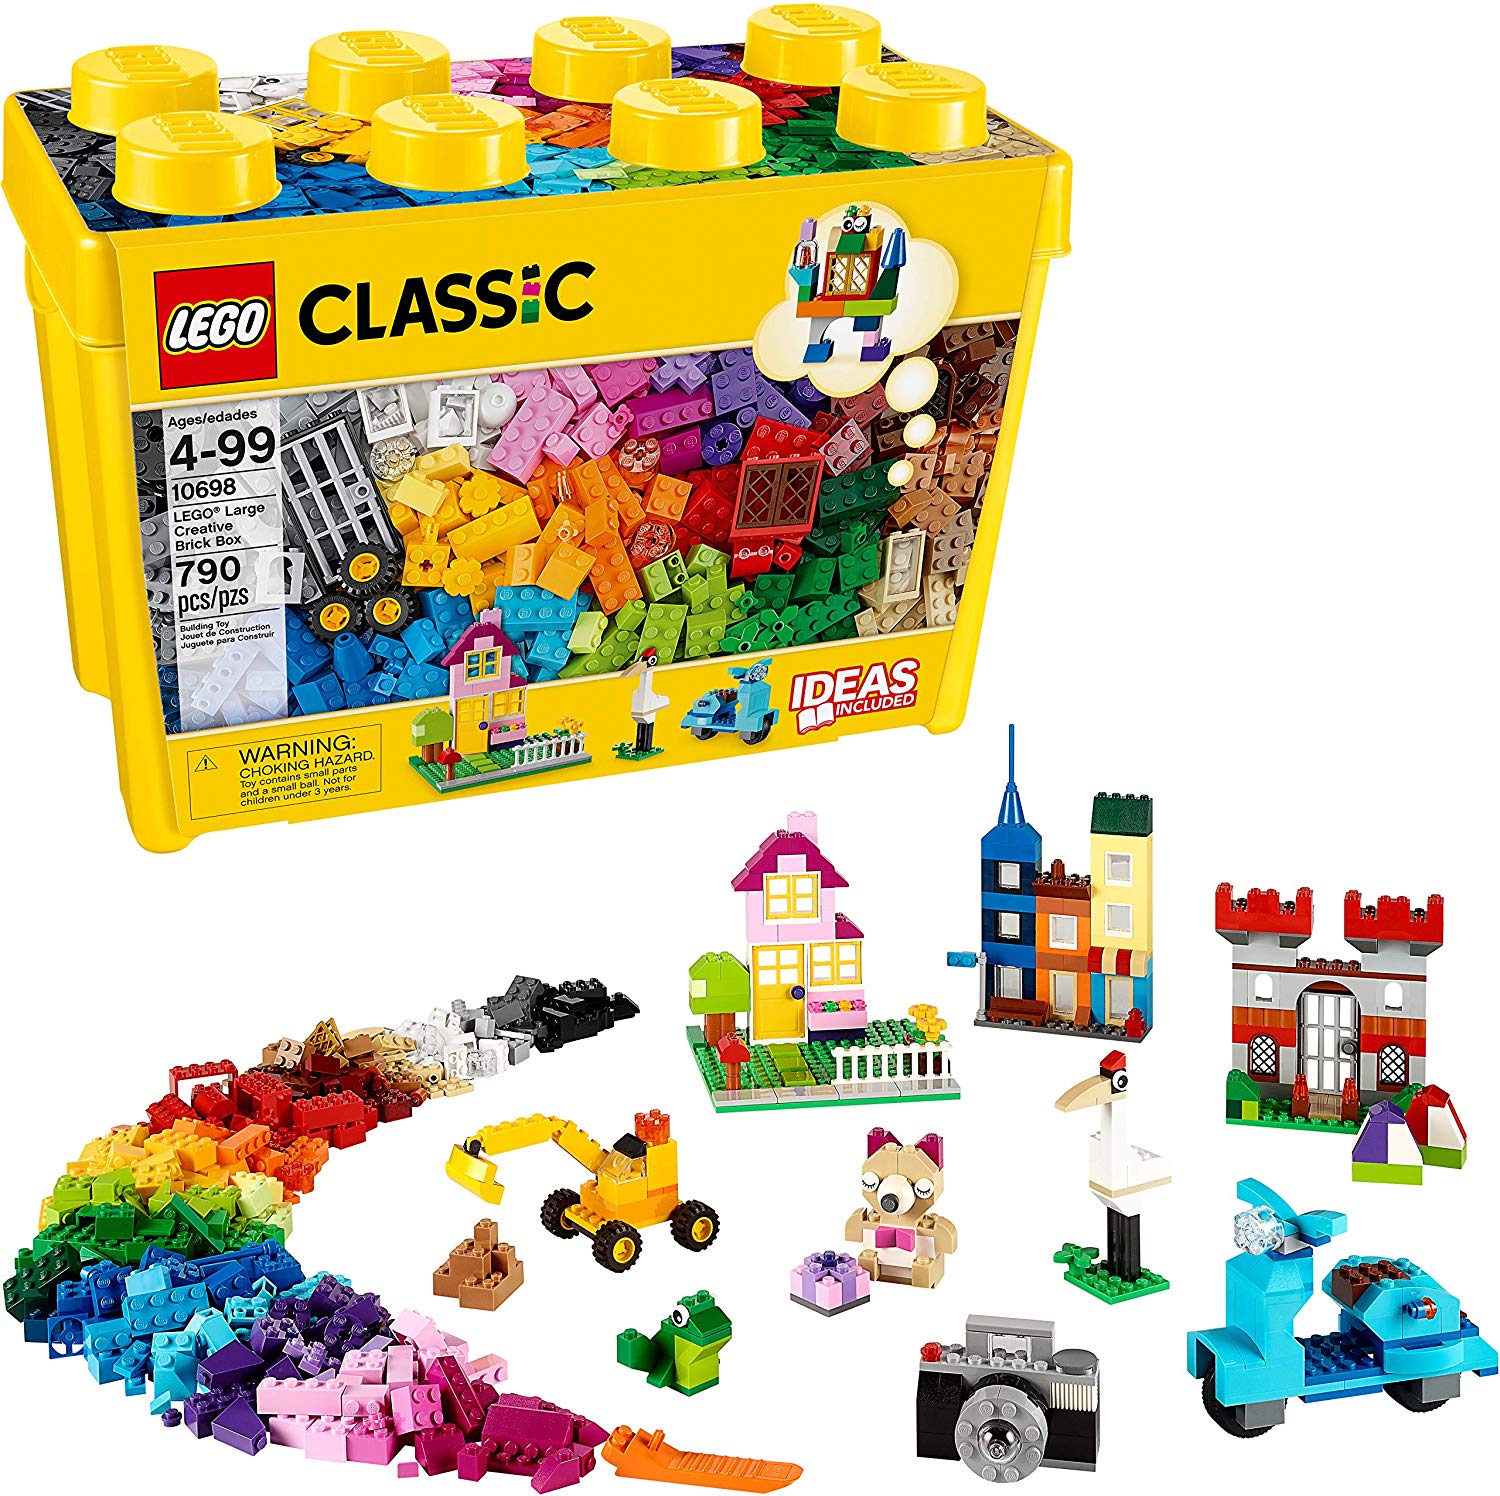 LEGO Classic Large Creative Brick Box 10698 Build Your Own Creative Toys, $39.99 (REG $59.99)